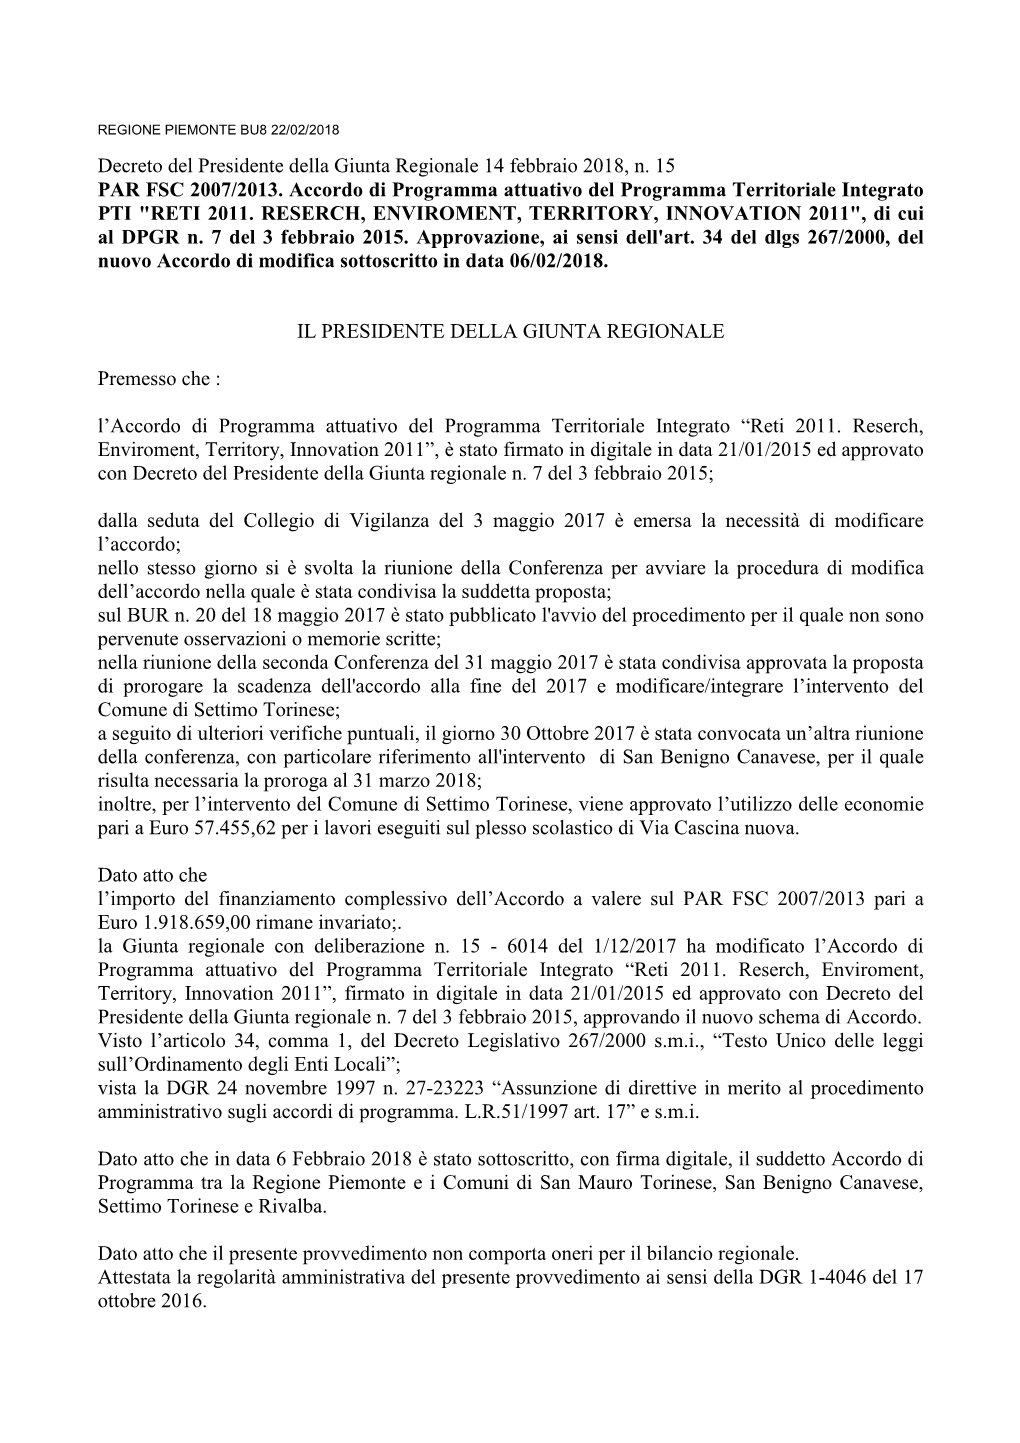 Decreto Del Presidente Della Giunta Regionale 14 Febbraio 2018, N. 15 PAR FSC 2007/2013